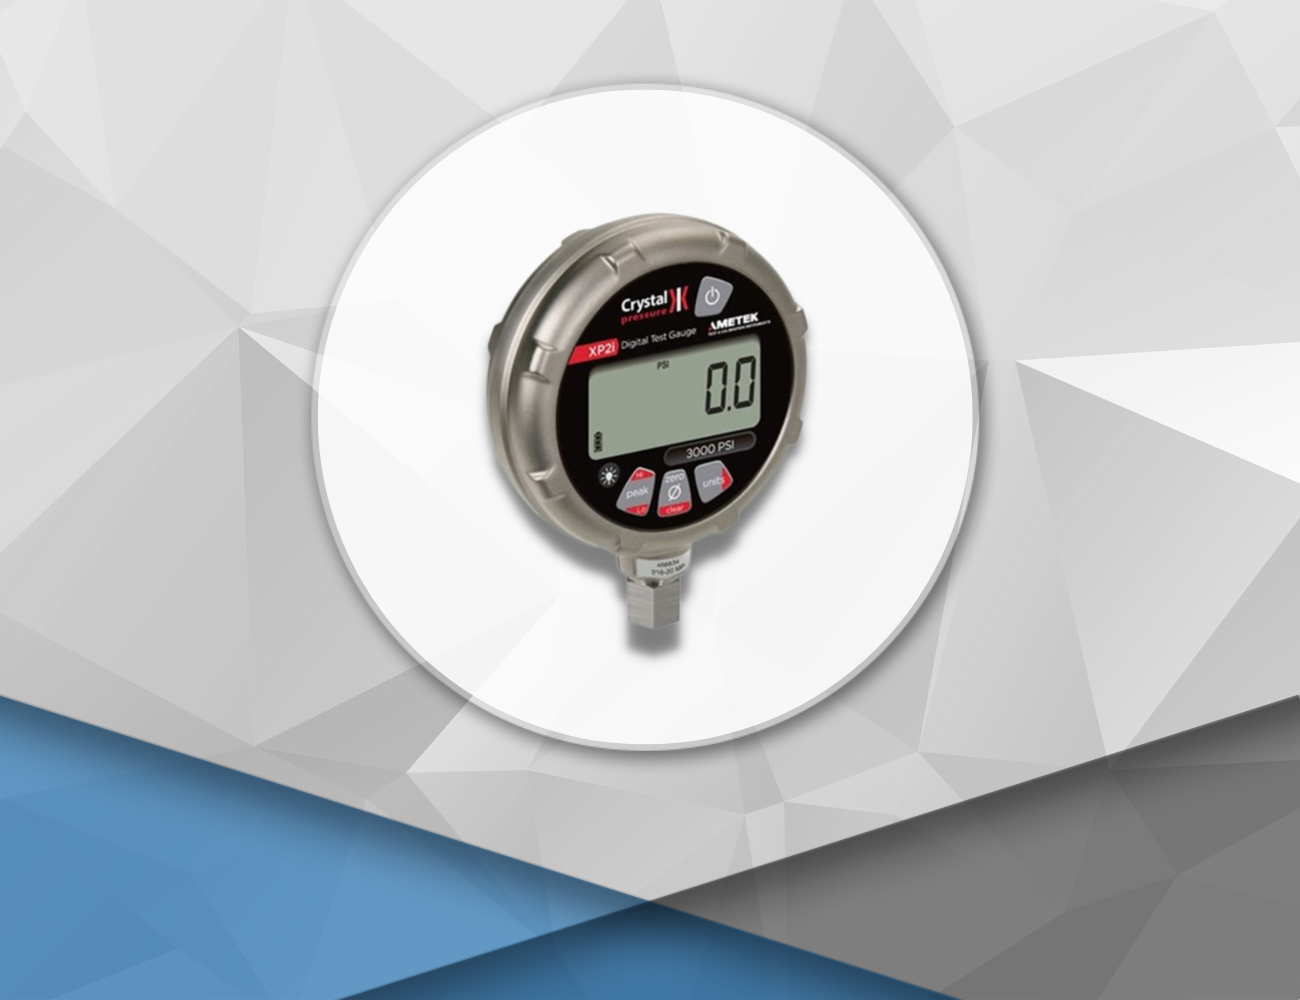 Image of the Crystal XP2i pressure gauge sold by Instrumart, a leading distributor for industrial instrumentation.